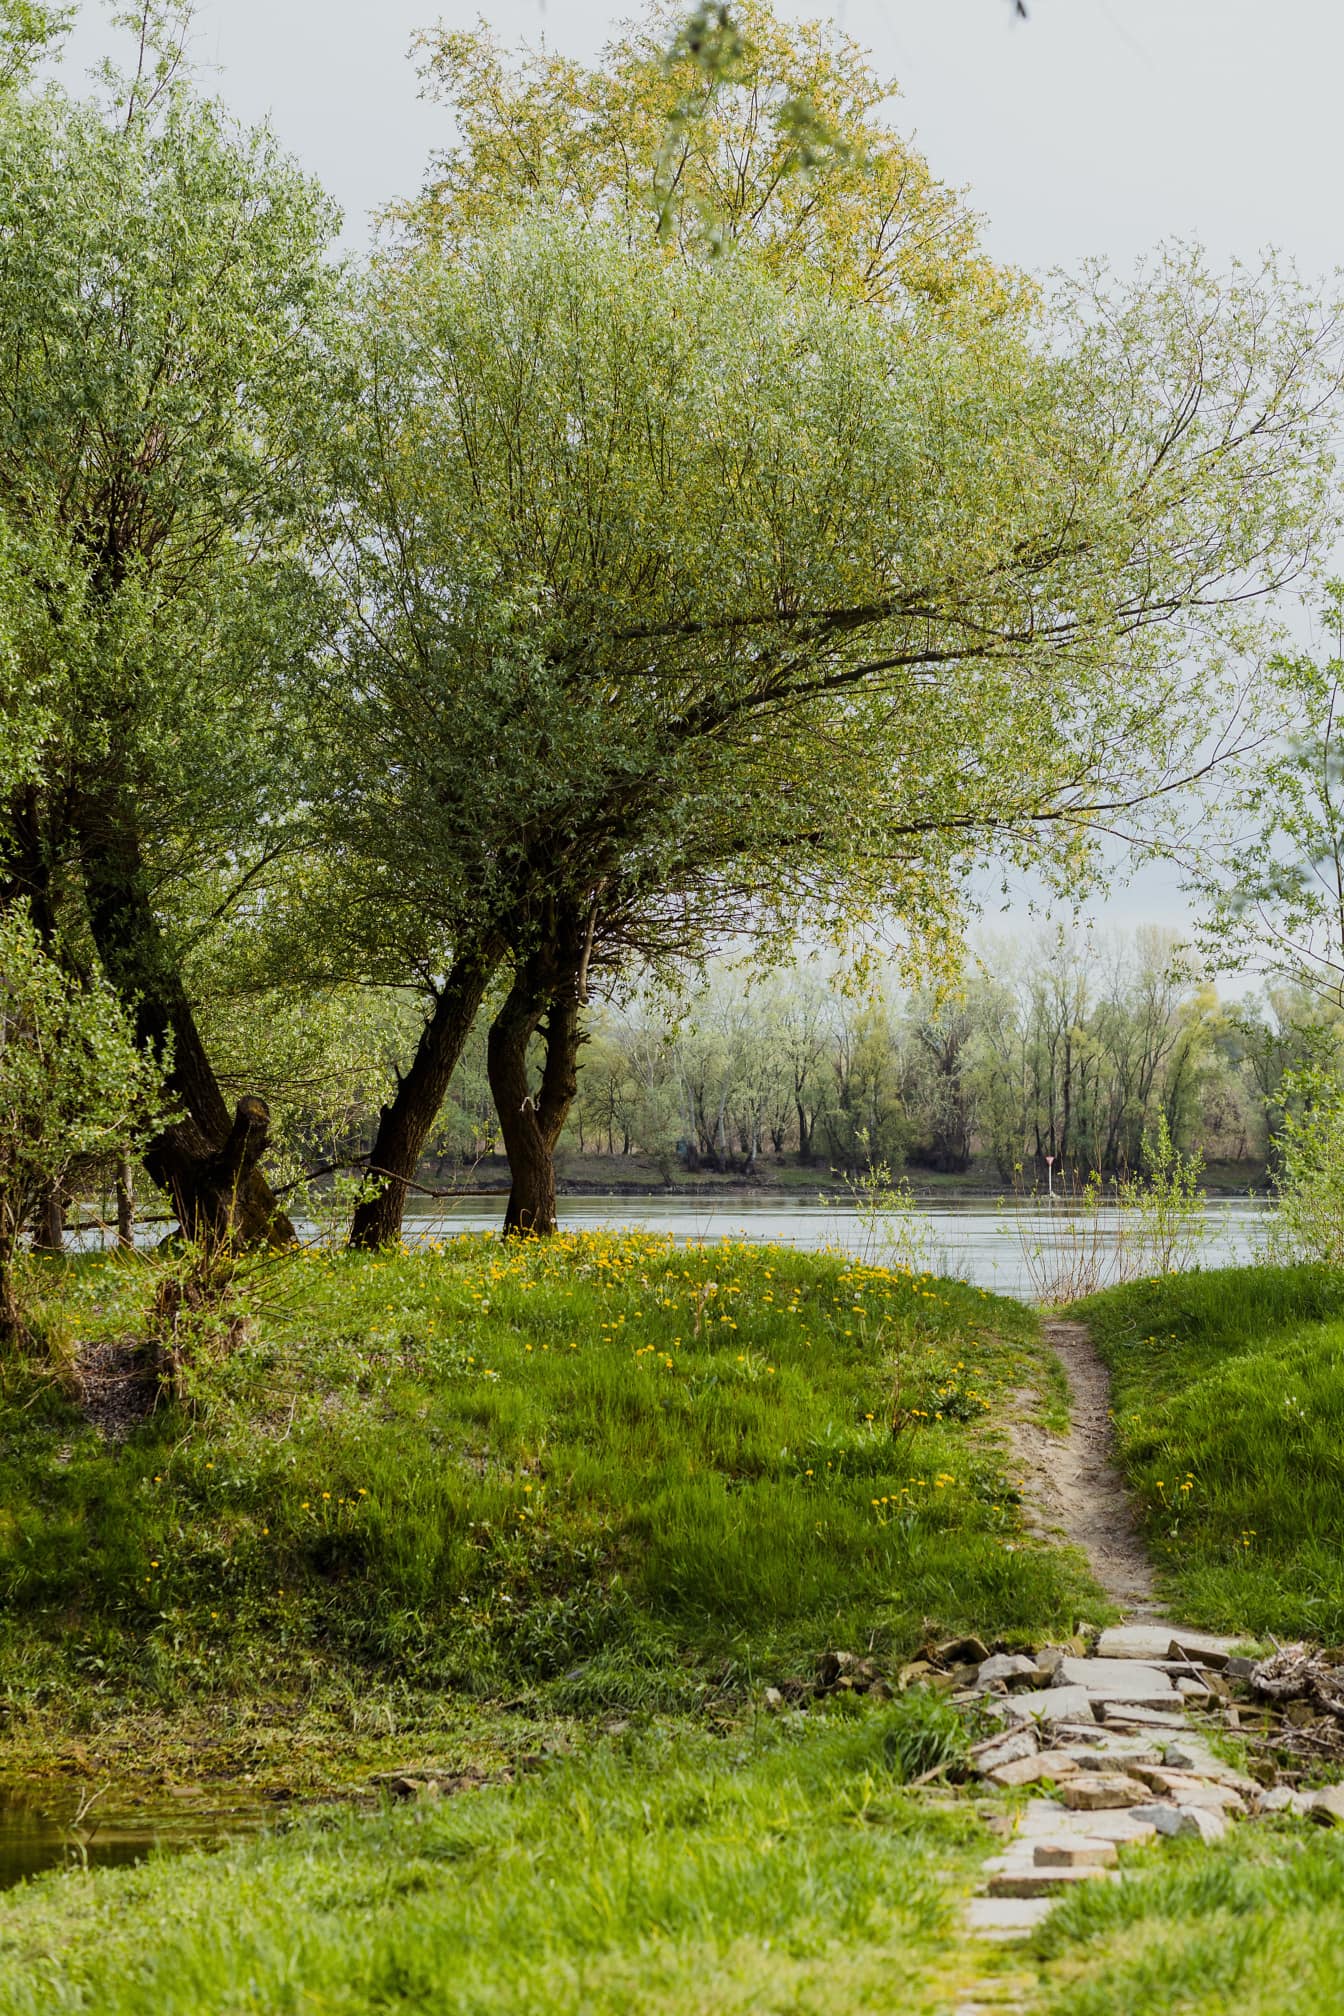 Überquerung des Weges am Flussufer im Frühling